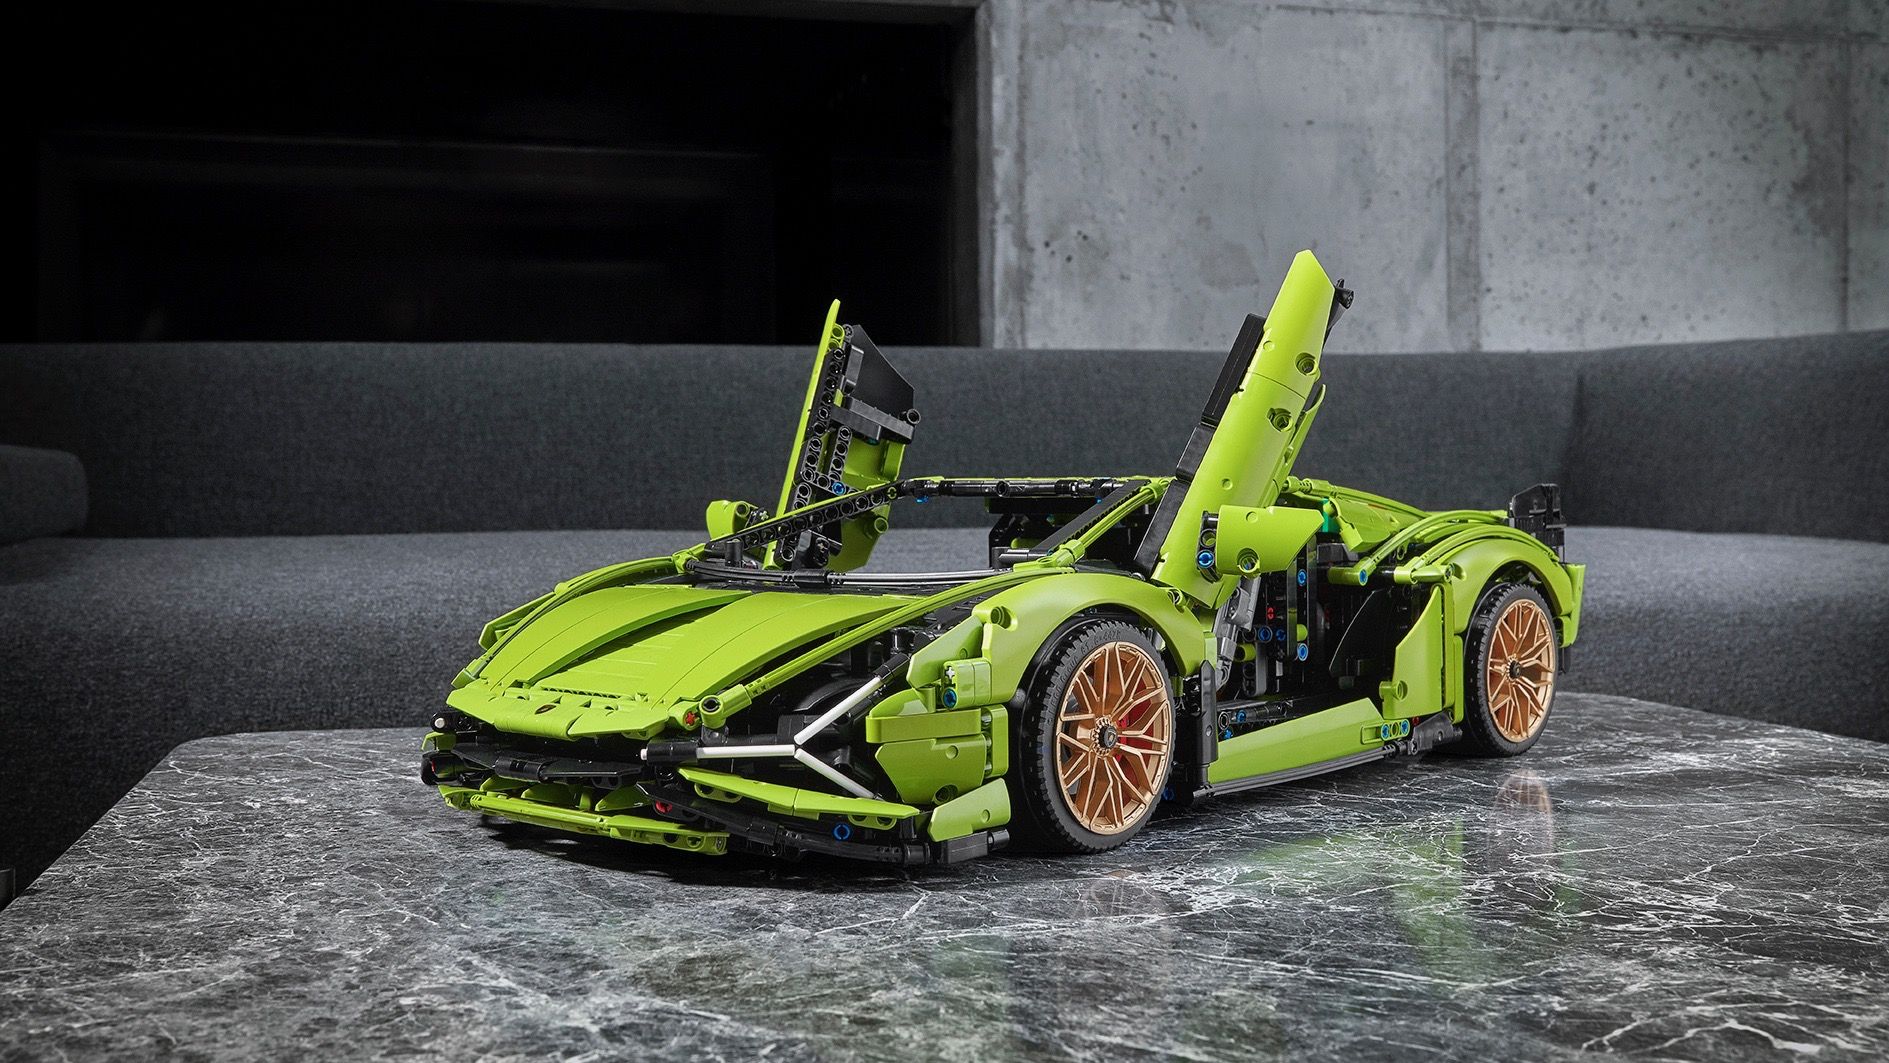 This Lego Technic Lamborghini Sian FKP 37 has 696 pieces